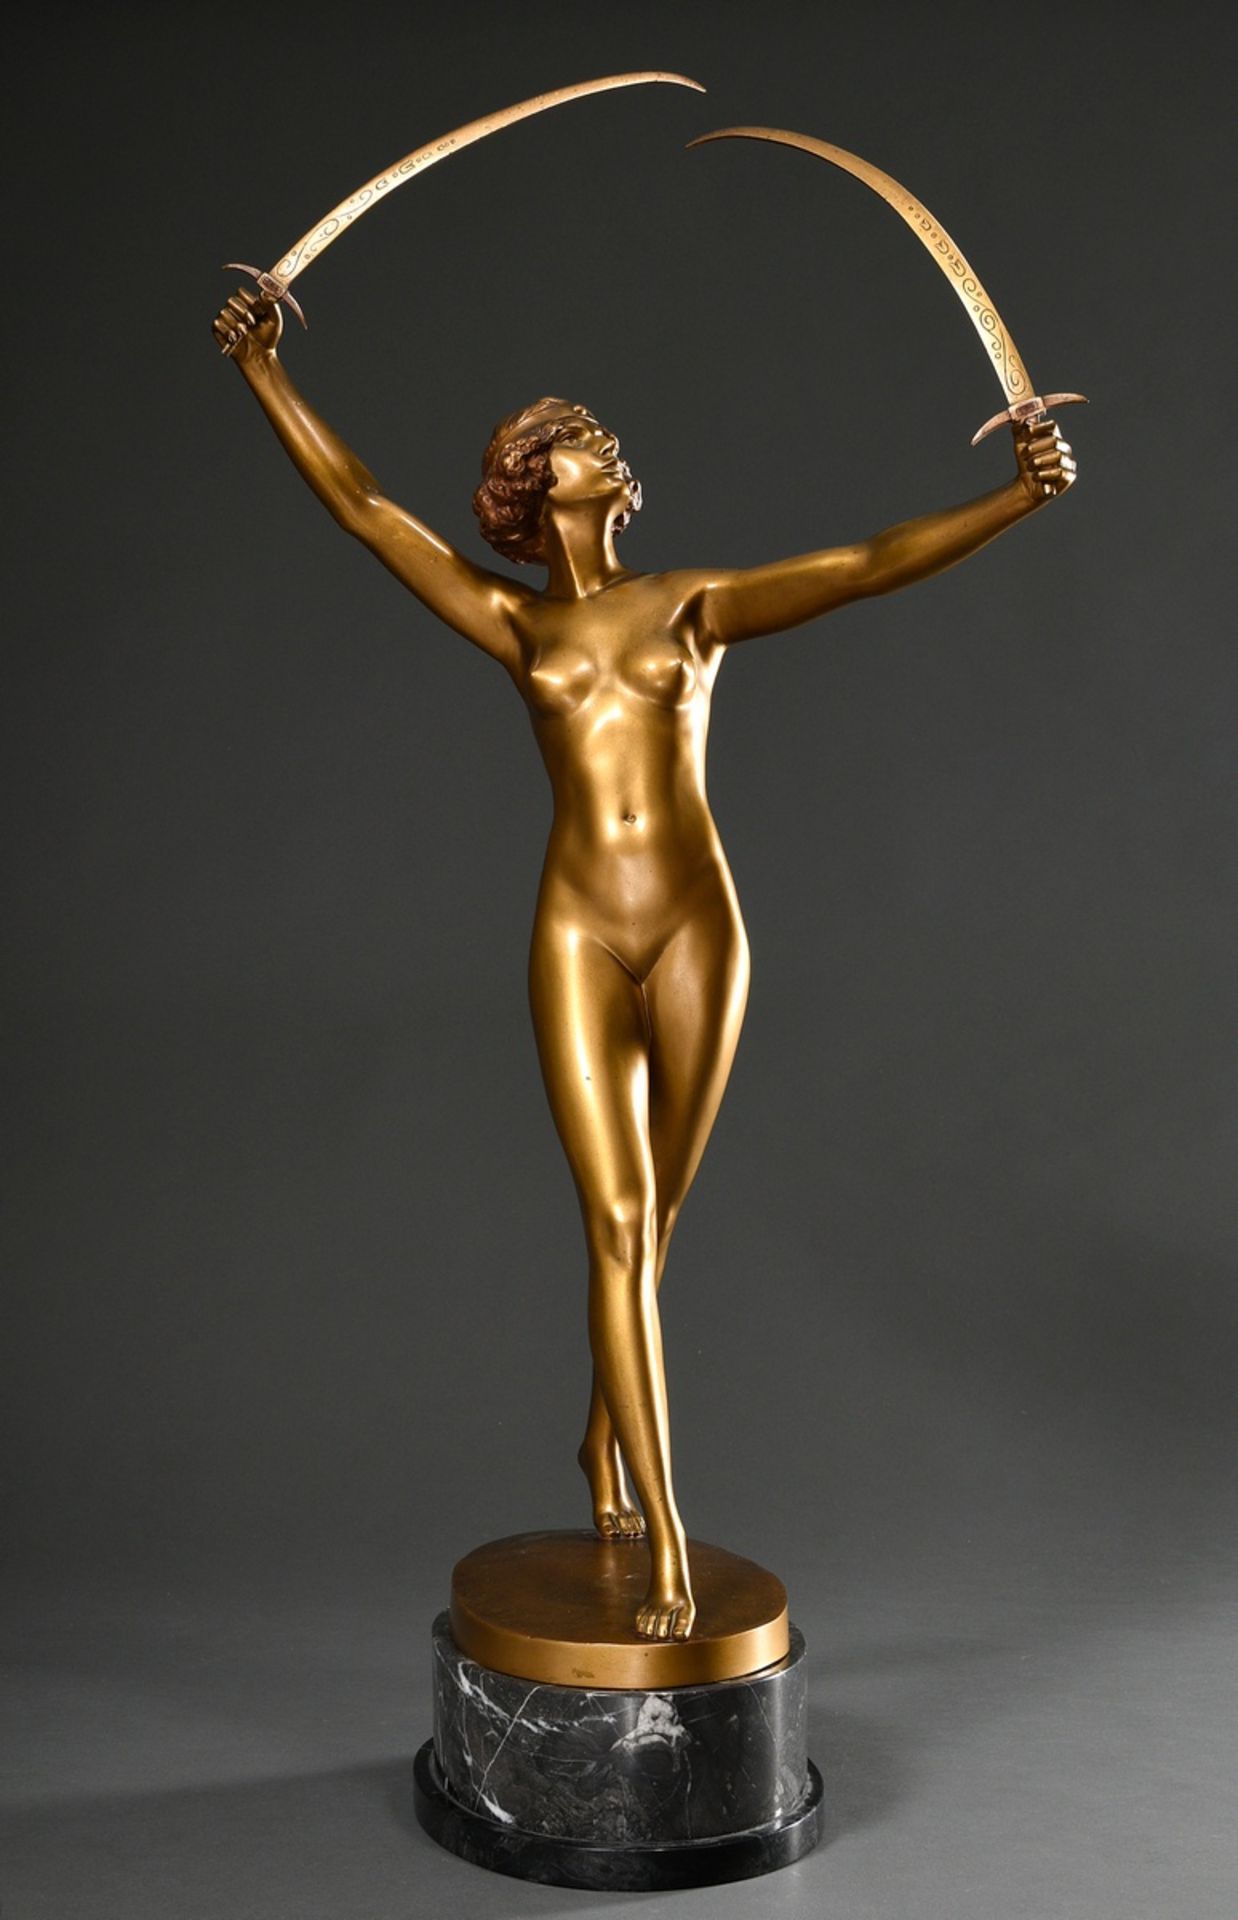 Jaeger, Gotthilf (1871-1933) "Sabre Dancer", around 1925, bronze with gold patina on grey marble pl